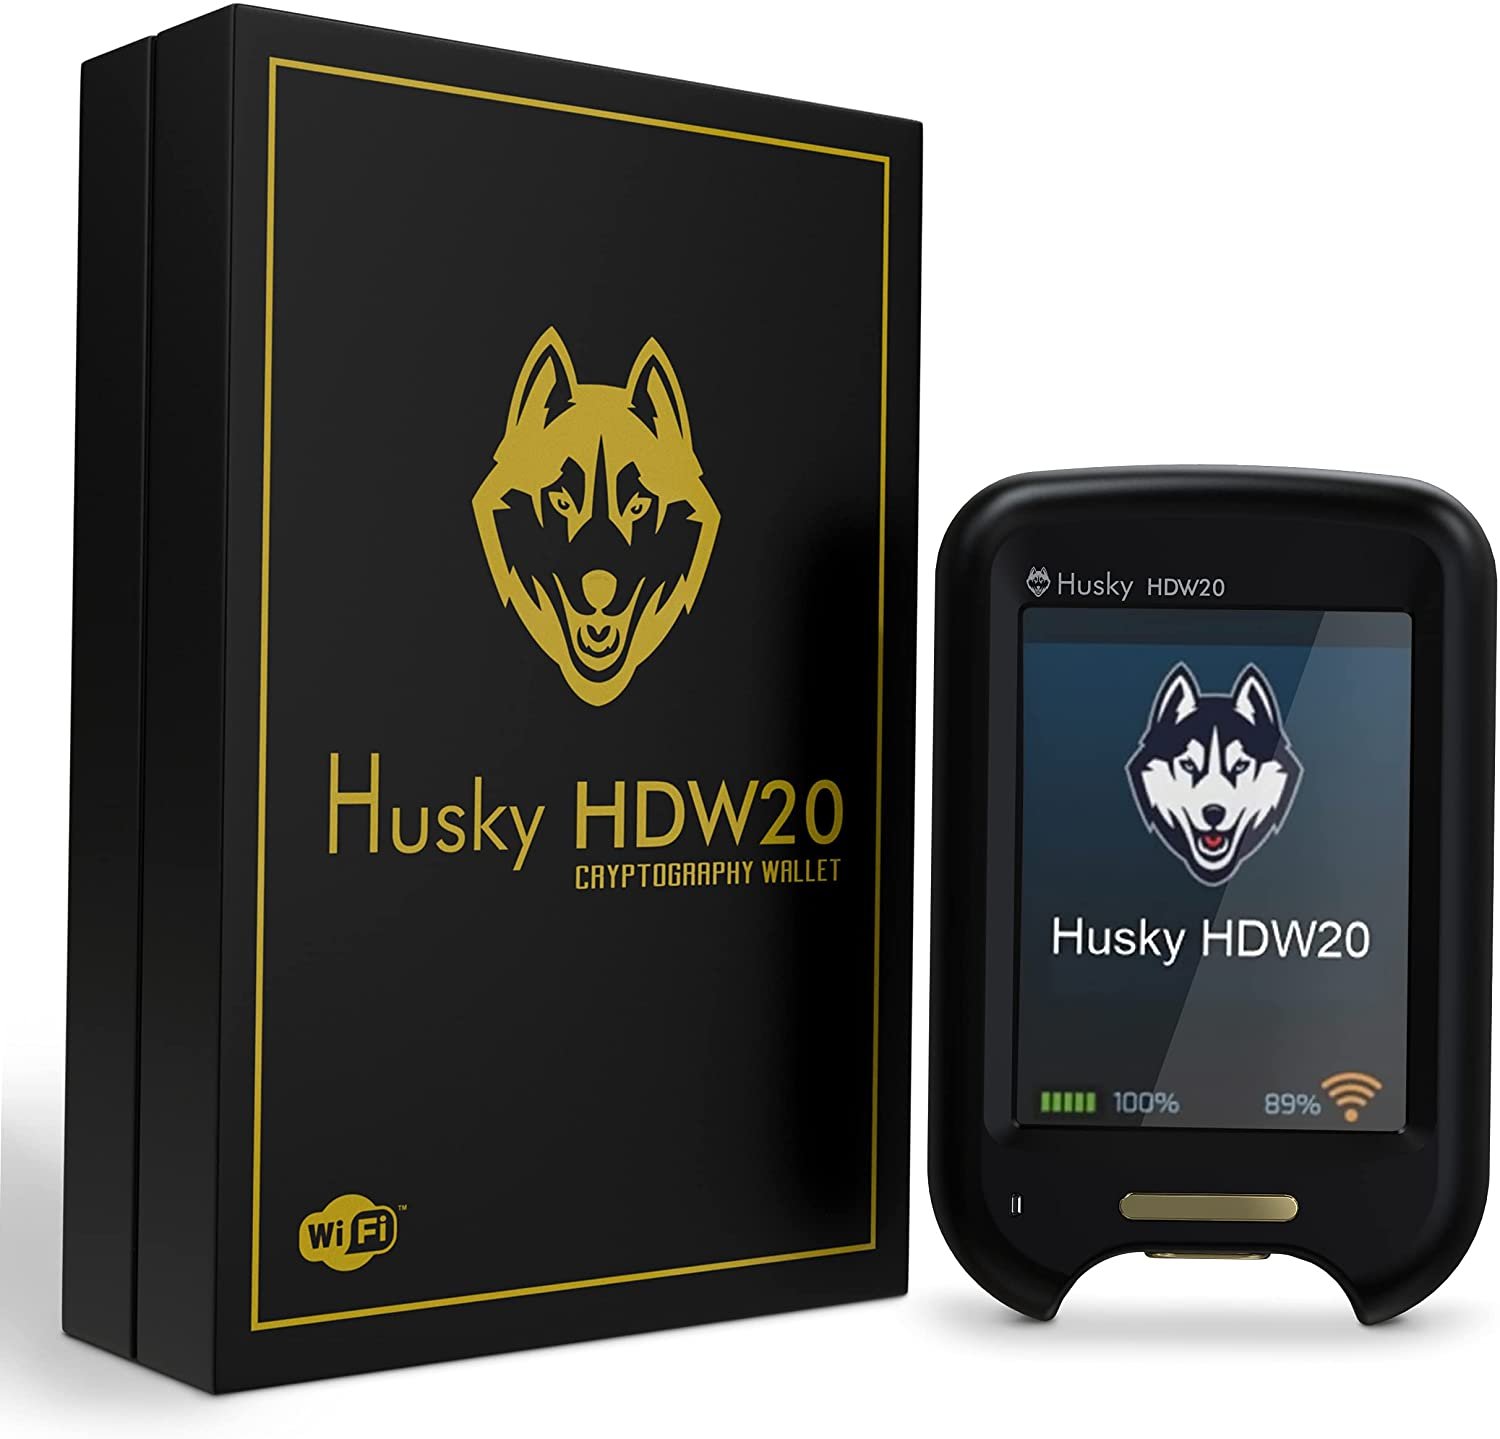 Husky HDW20 crypto hardware wallet product image